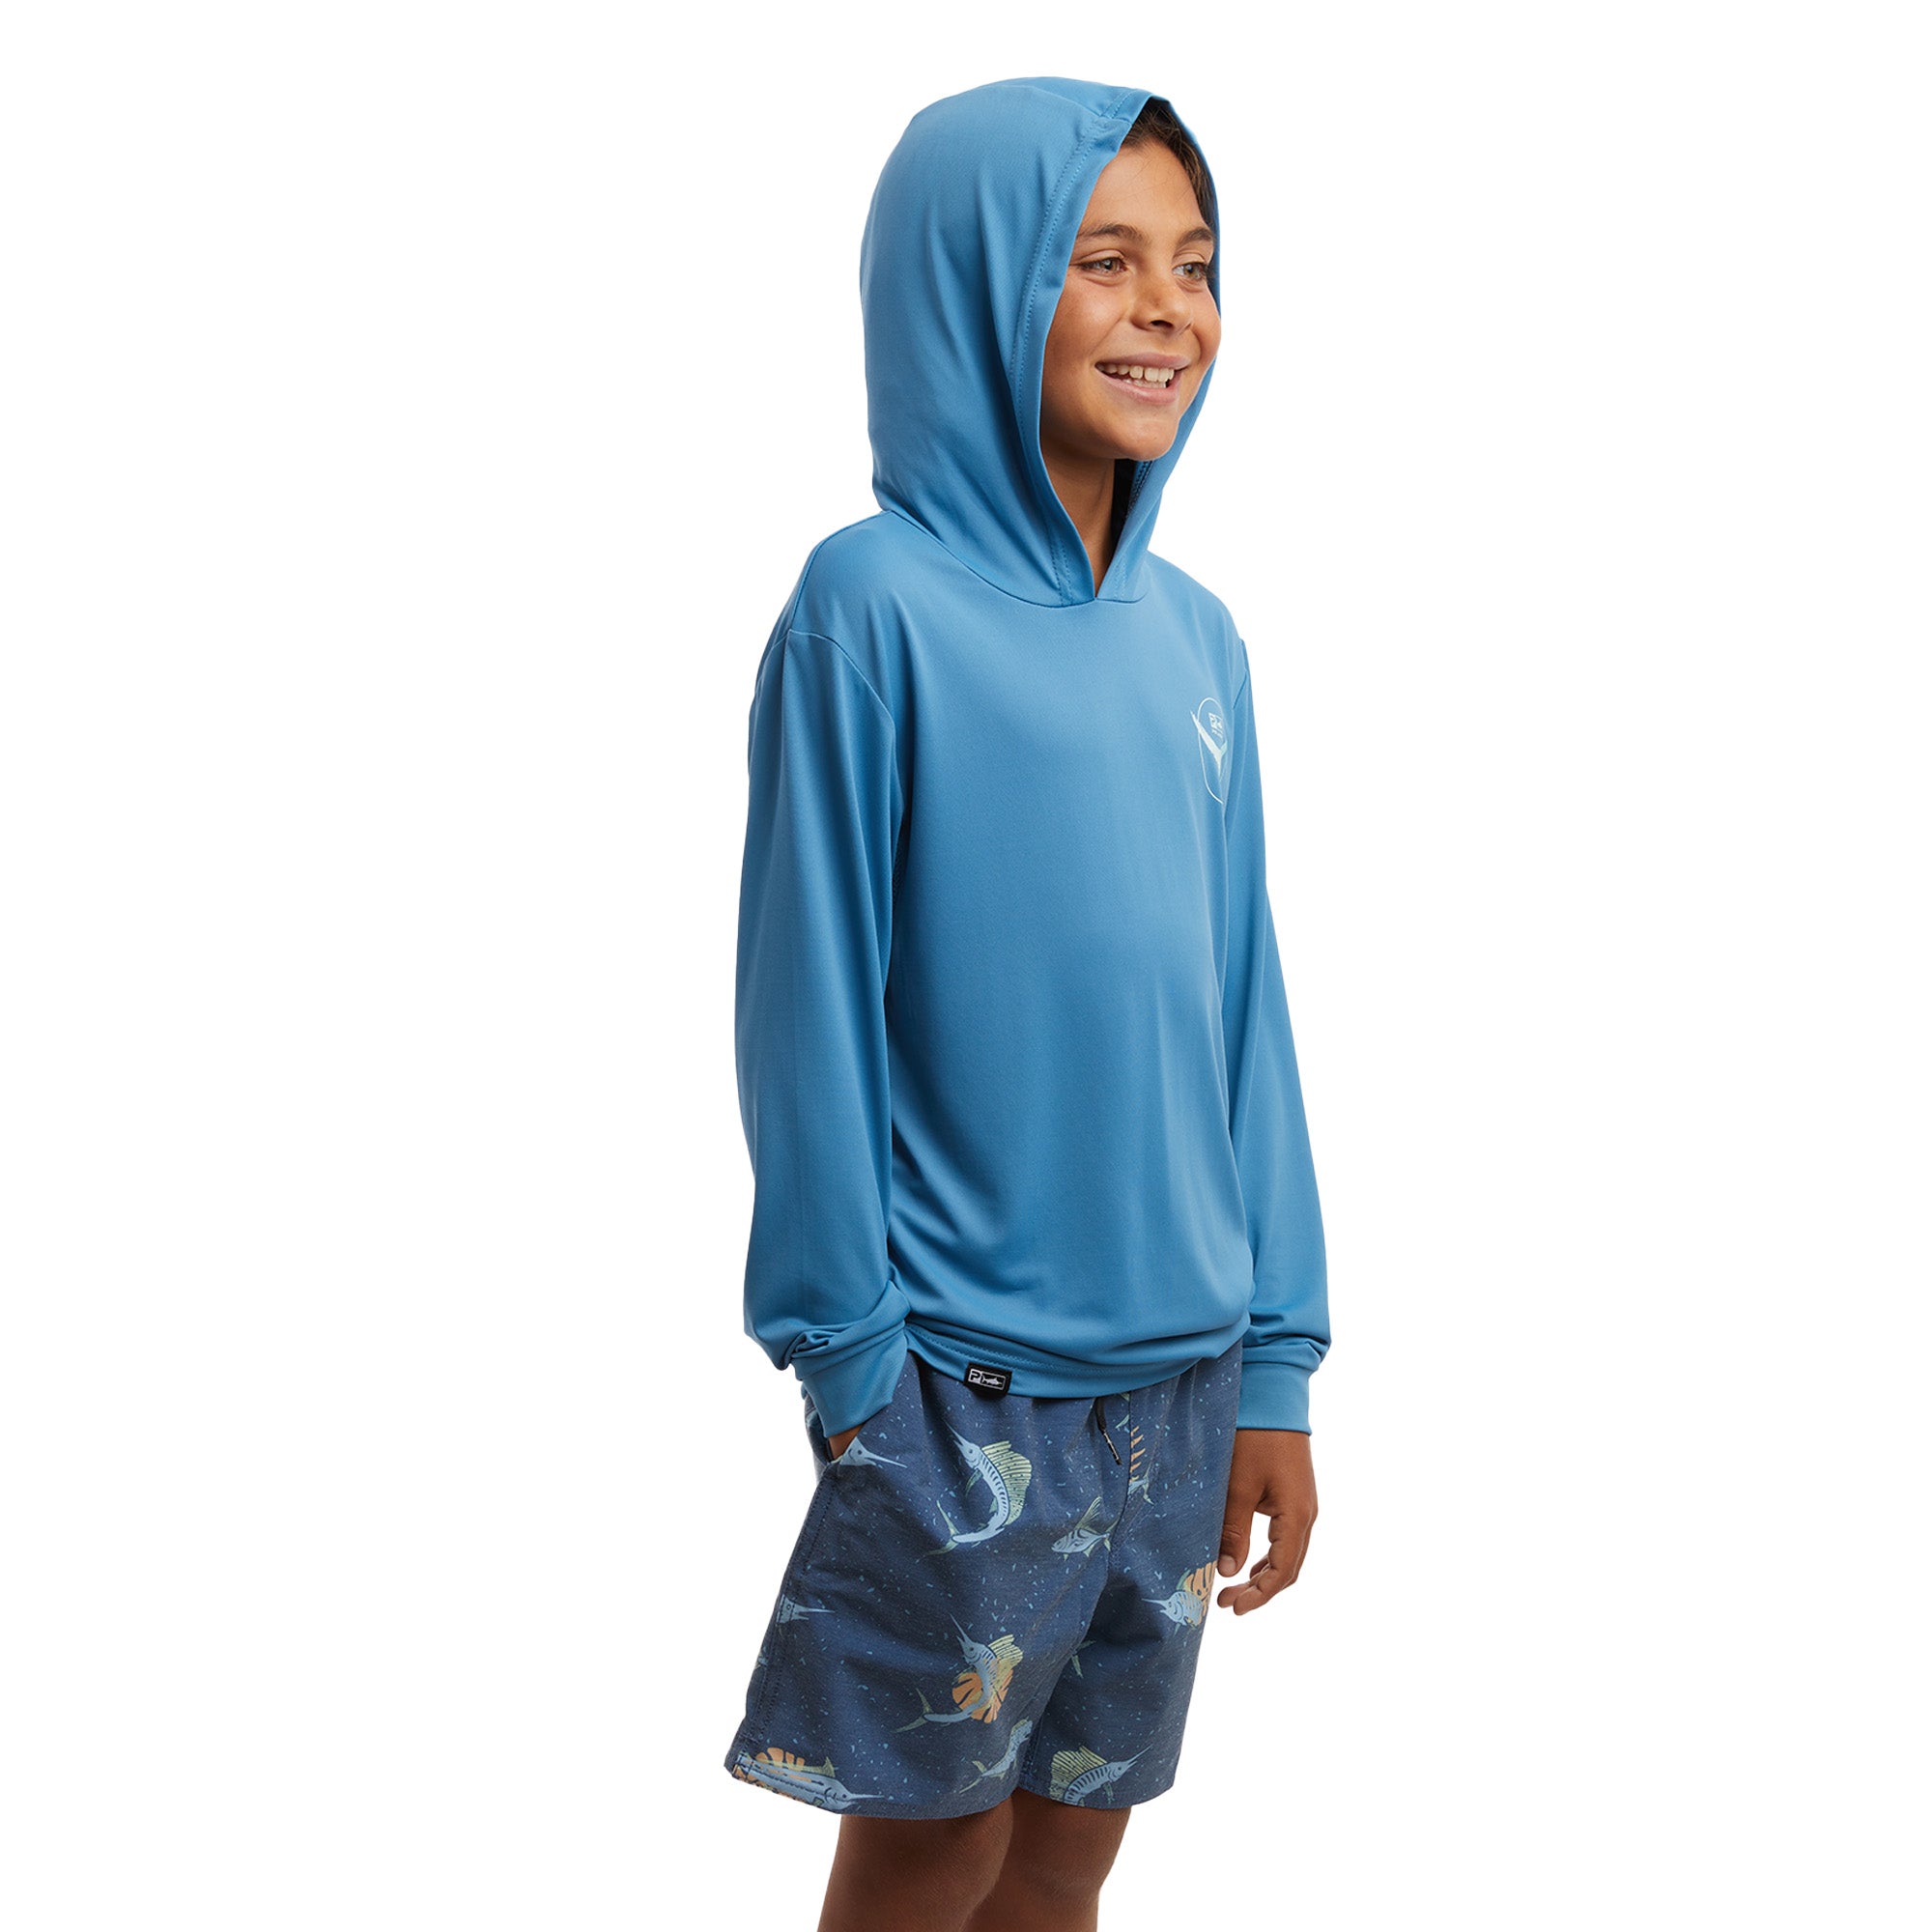 Youth Aquatek Tails Up Youth Hooded Fishing Shirt